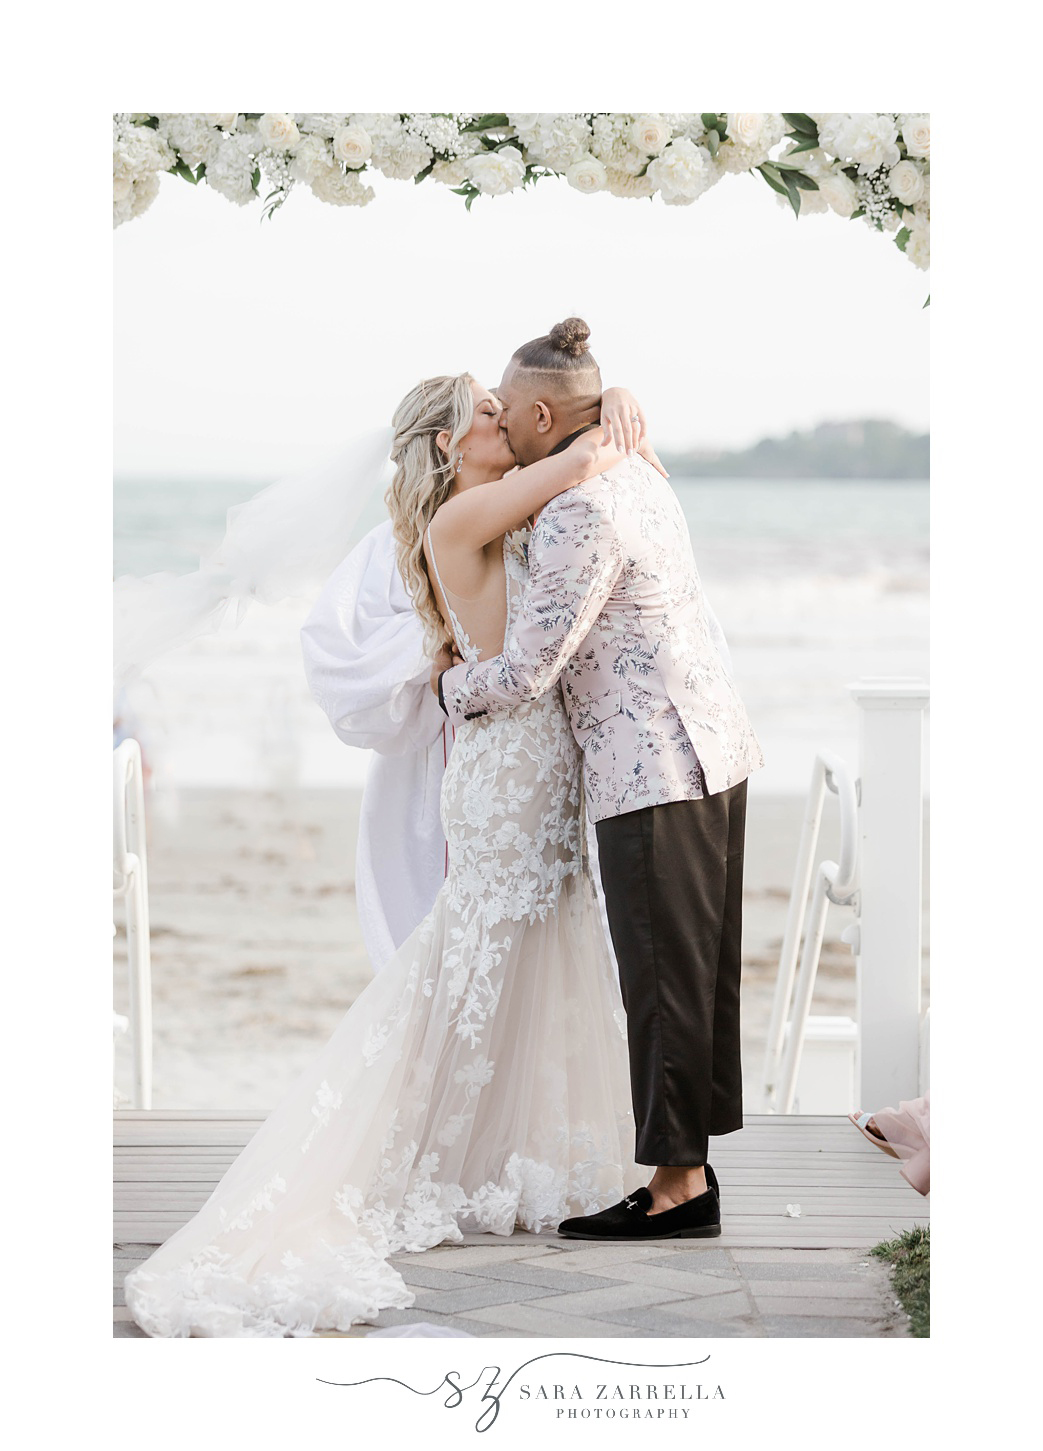 newlyweds kiss in aisle at Newport Beach House